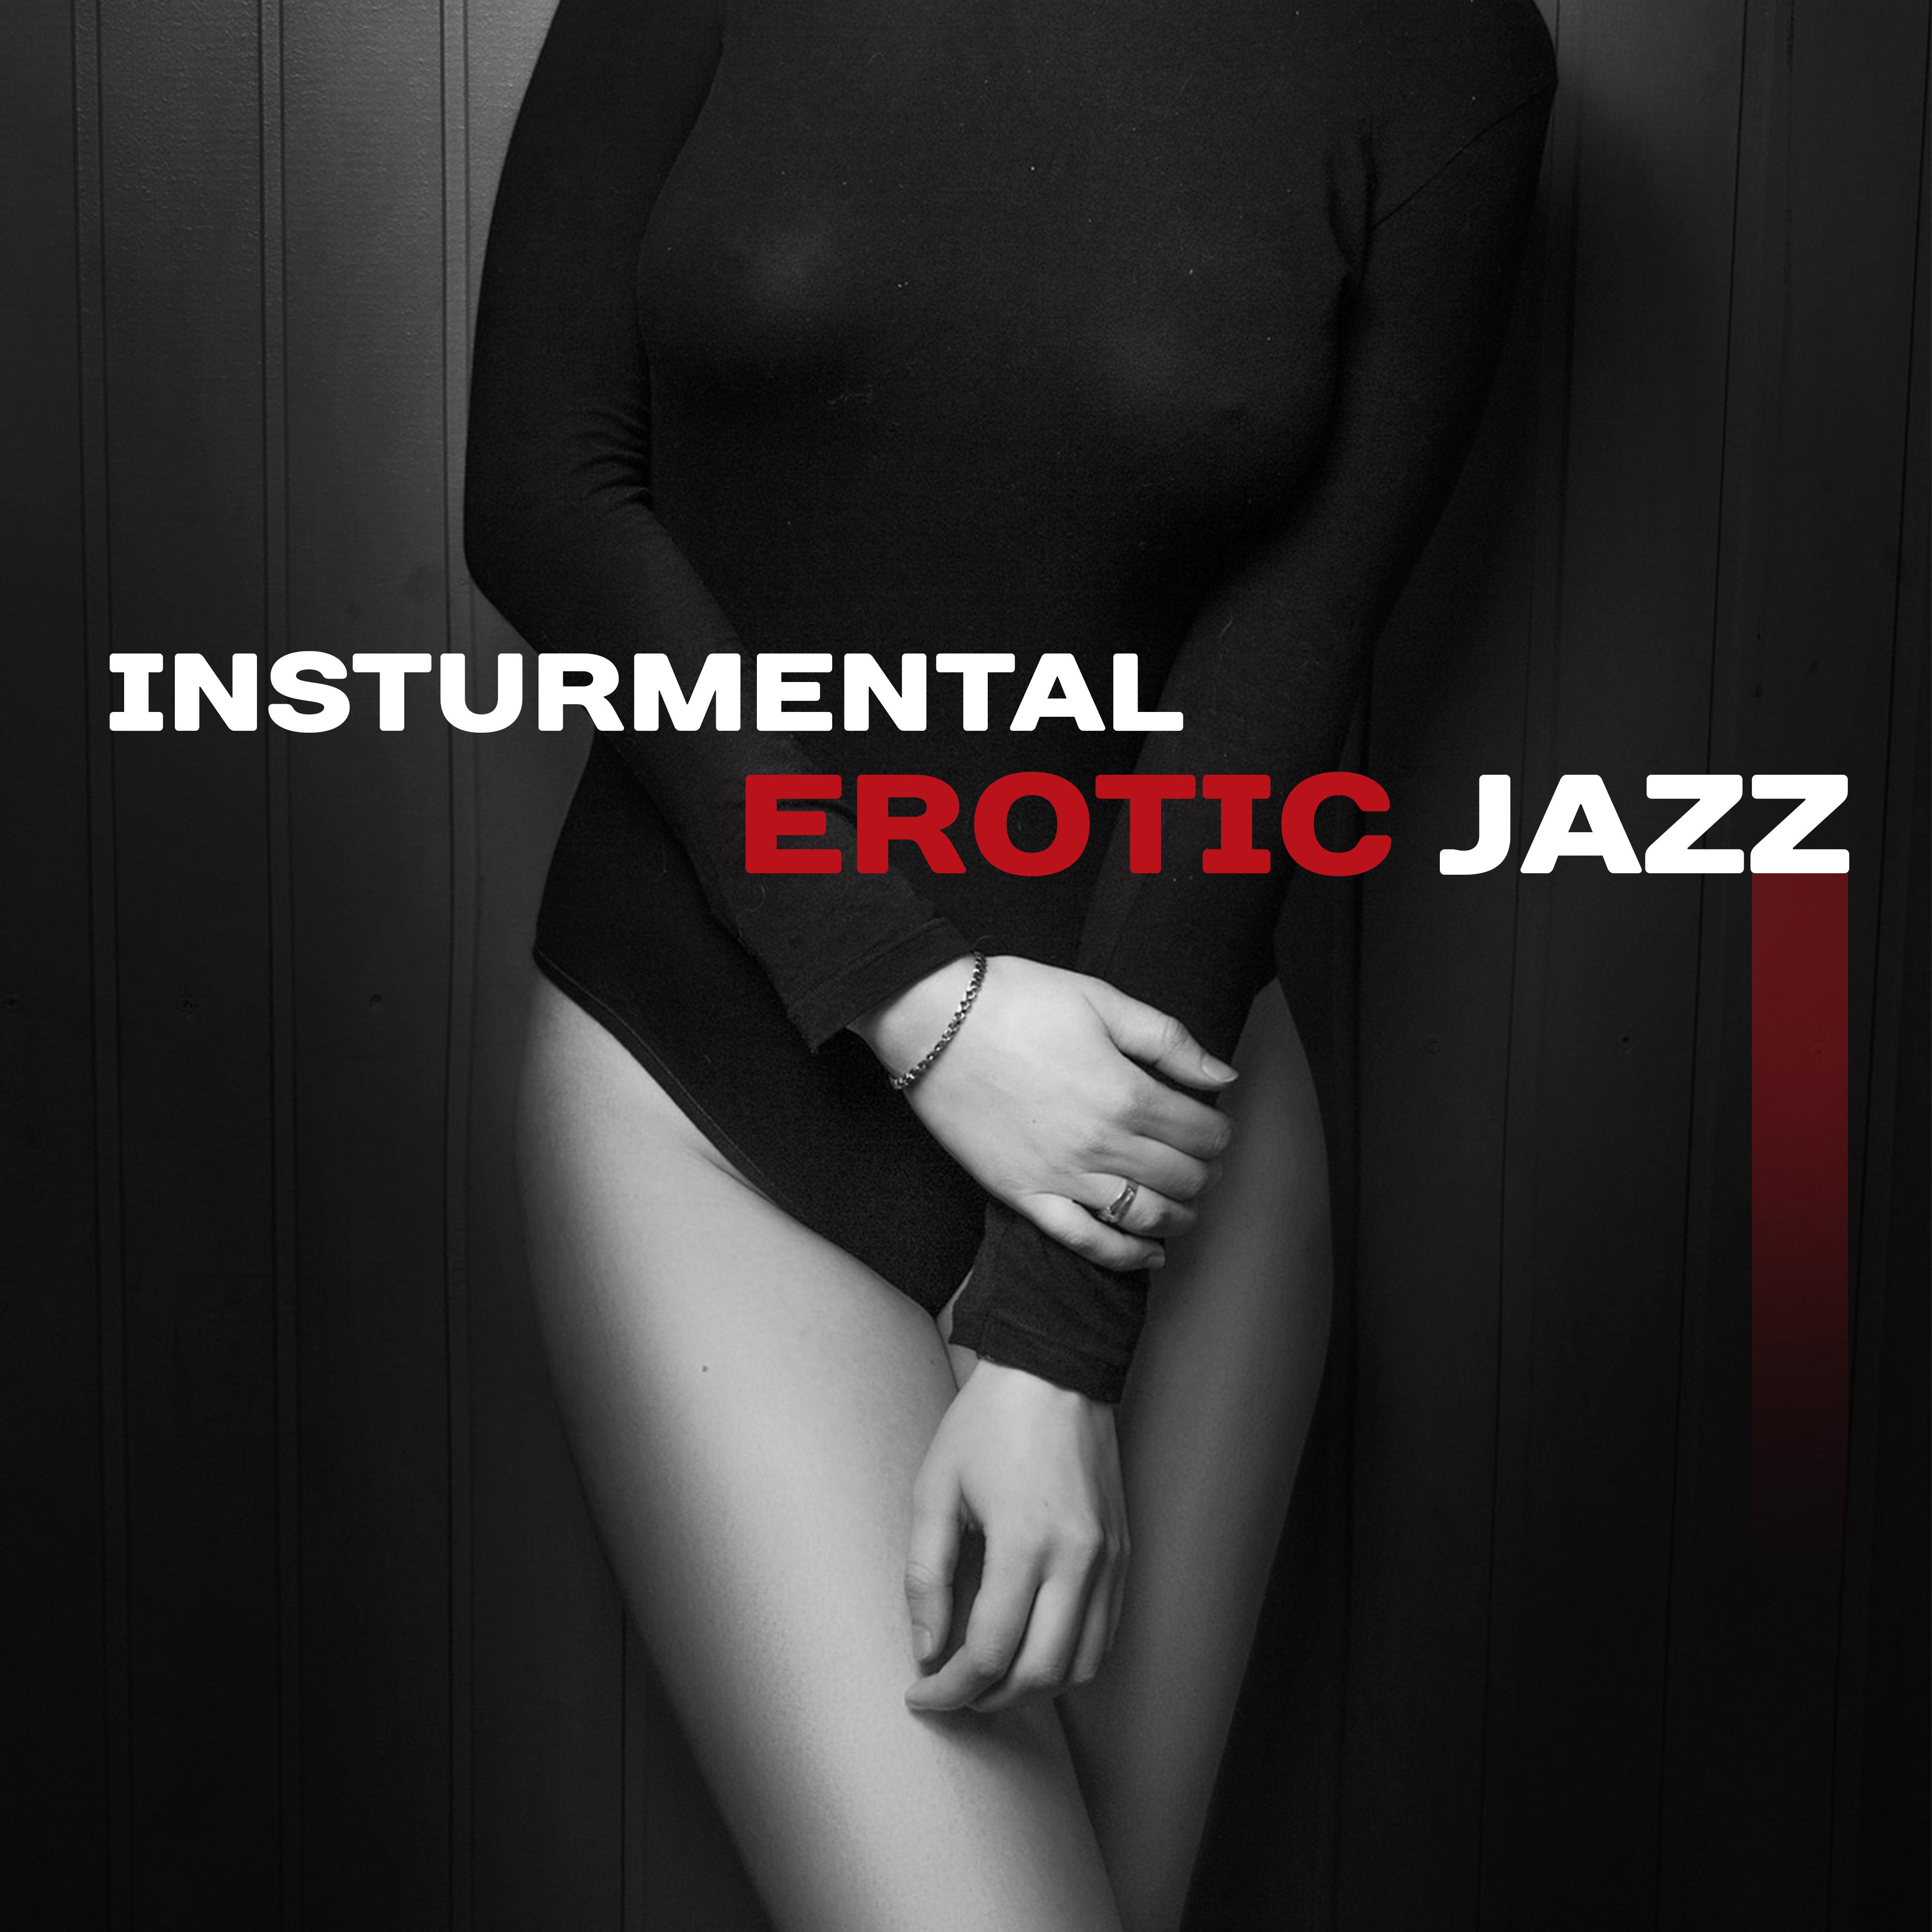 Insturmental Erotic Jazz – Calming Sounds to Relax, Easy Listening, Piano Jazz Music, Romantic Evening